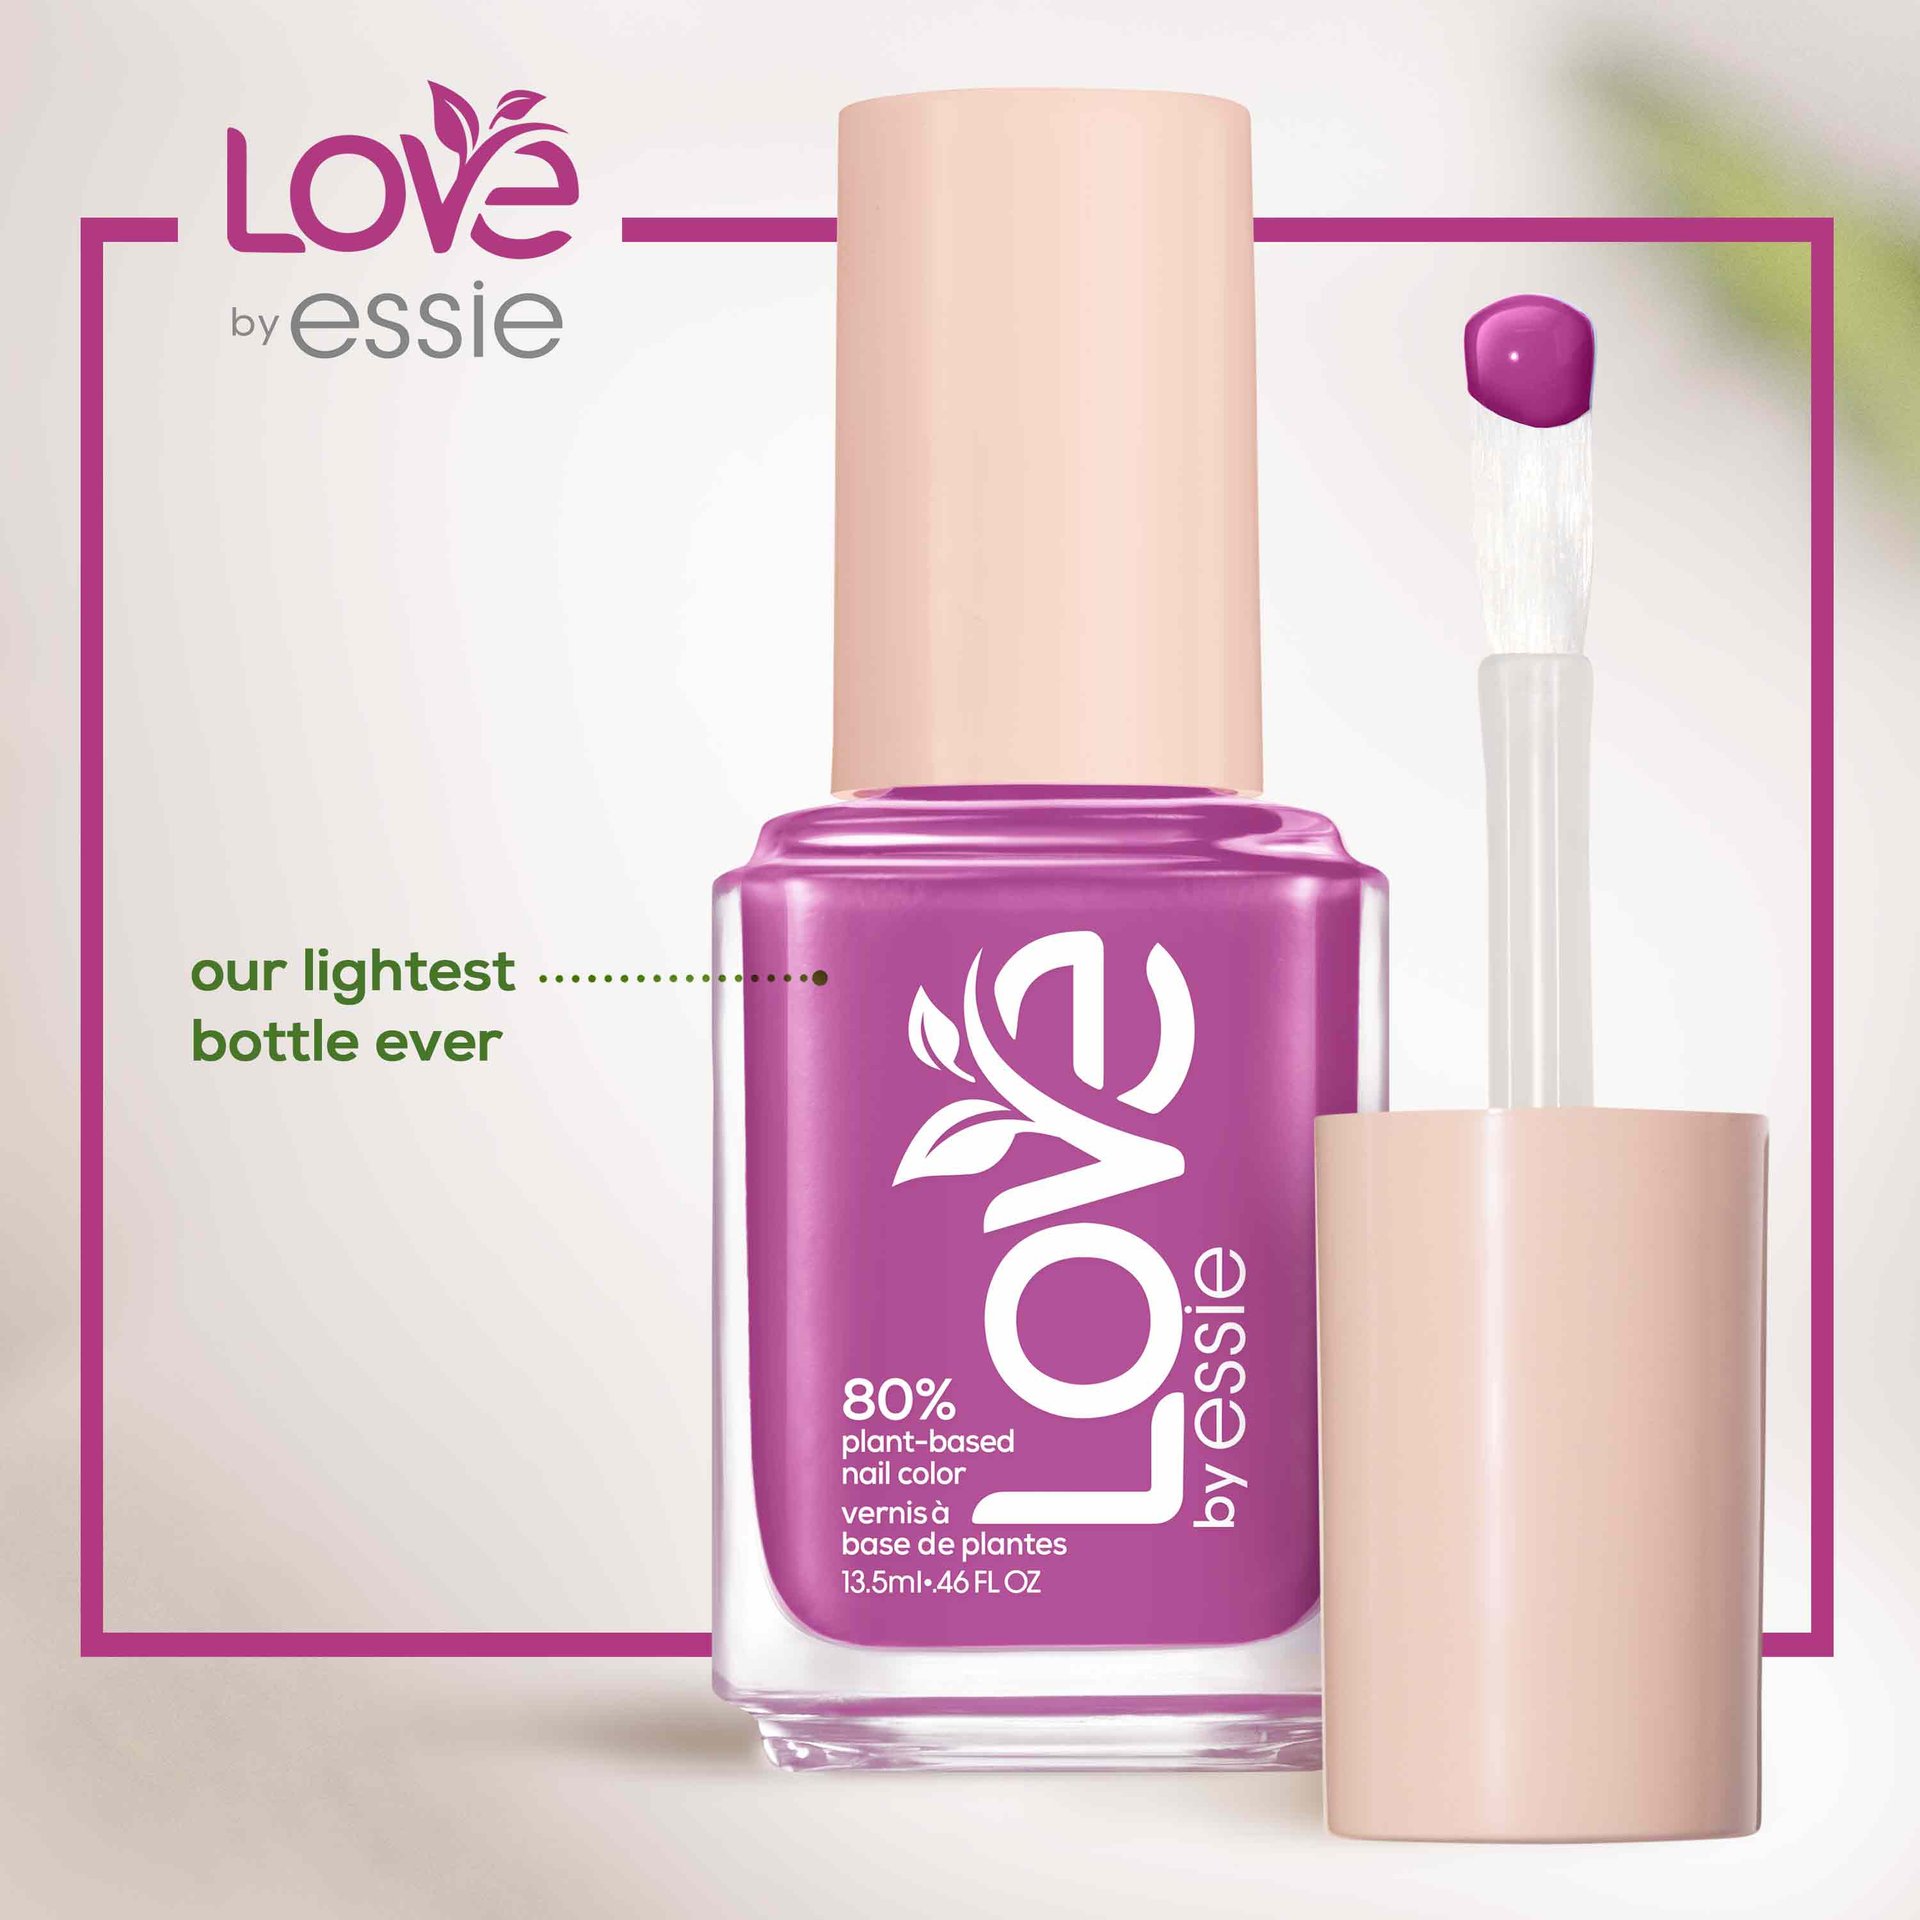 LOVe by essie - plant-based nail polish